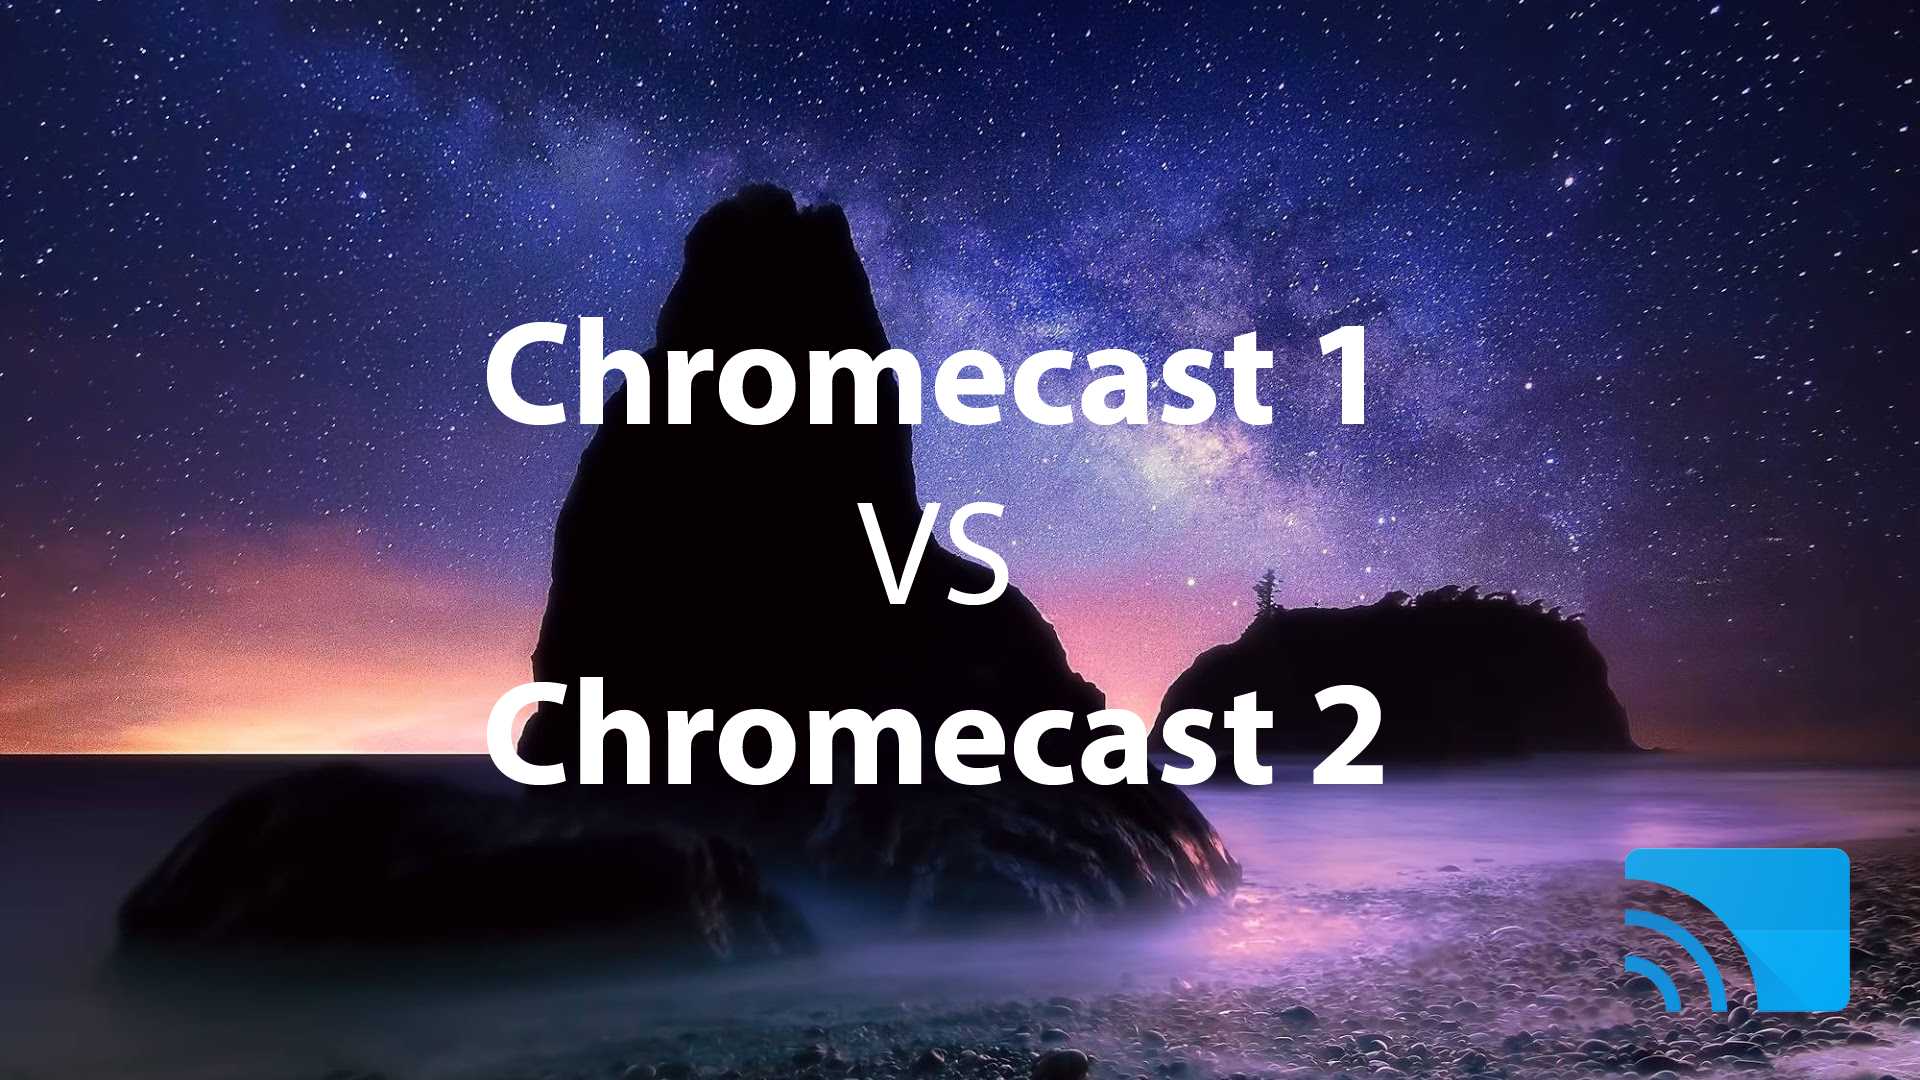 chromecast-1-vs-chromecast-2-title